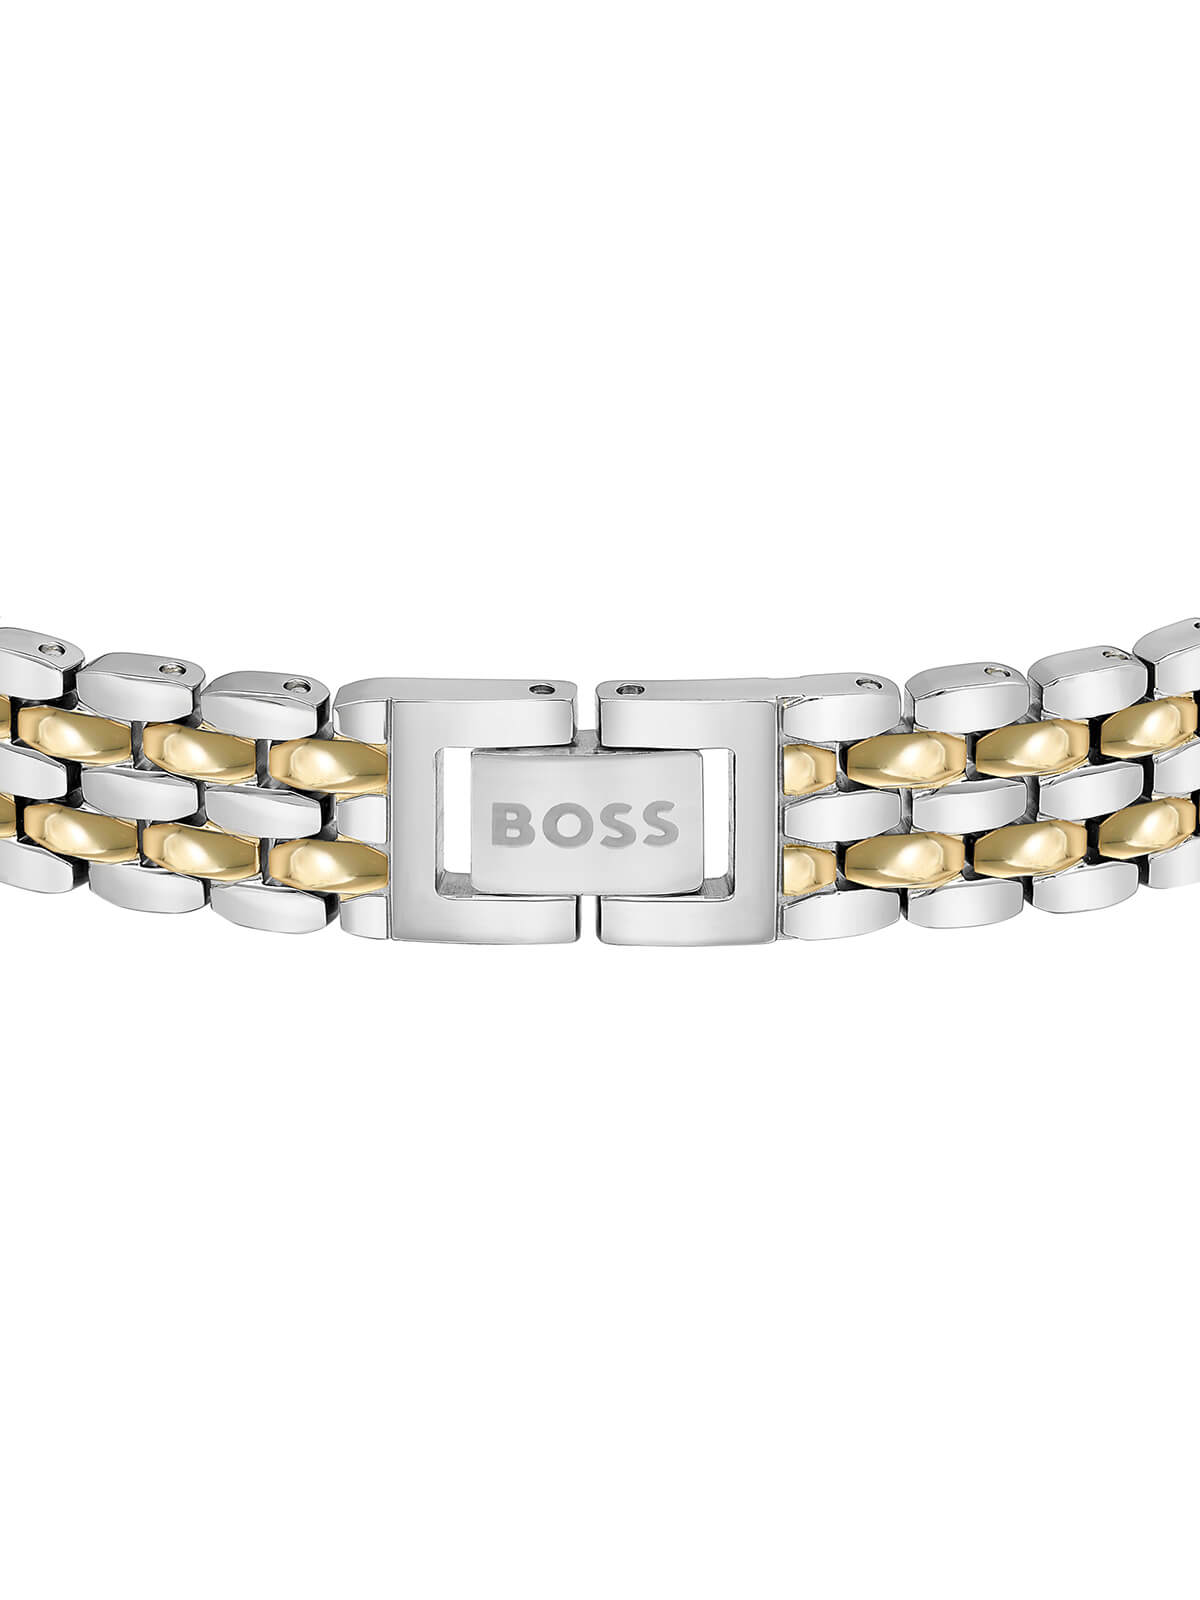 BOSS Isla Bracelet in Stainless Steel & Gold Plating 1580517